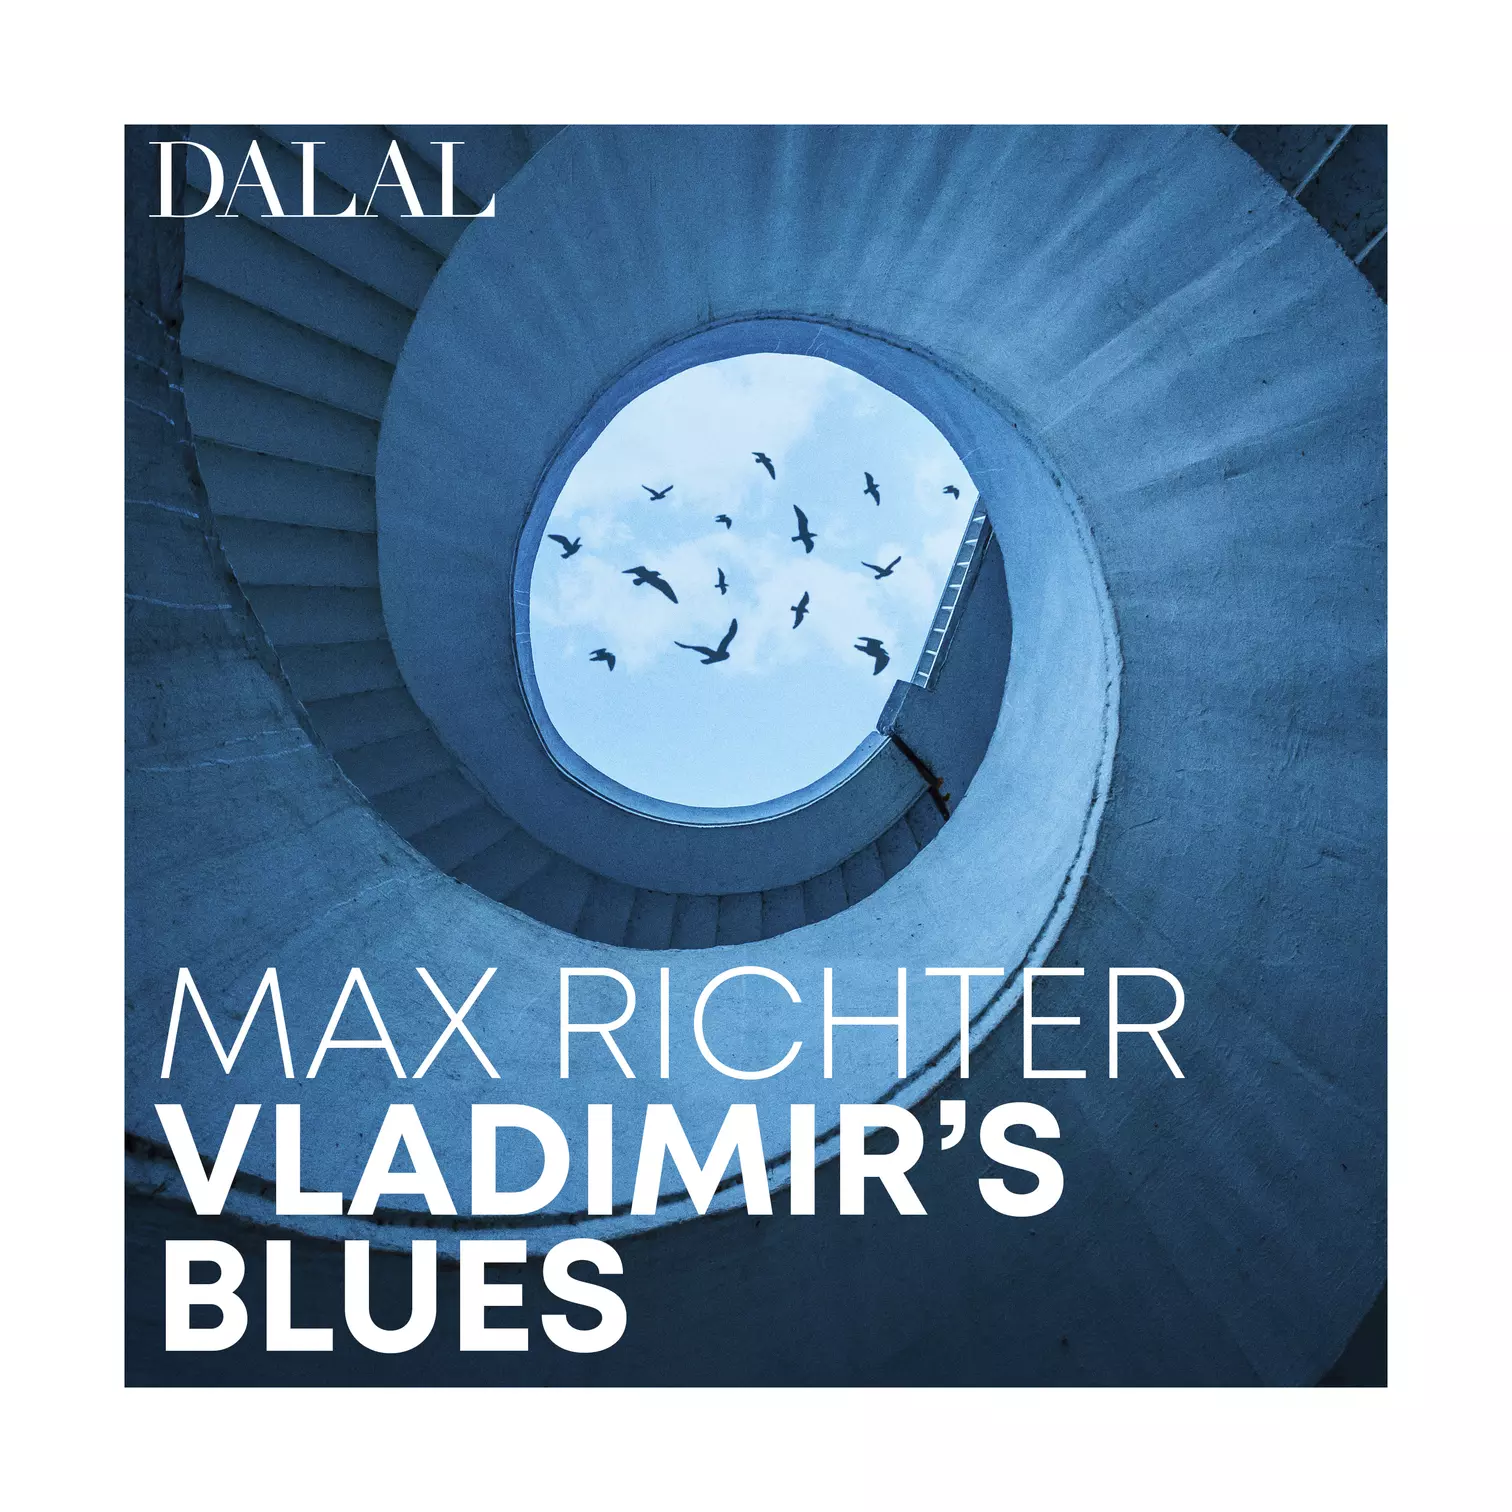 Dalal - Max Richter: Vladimir’s Blues